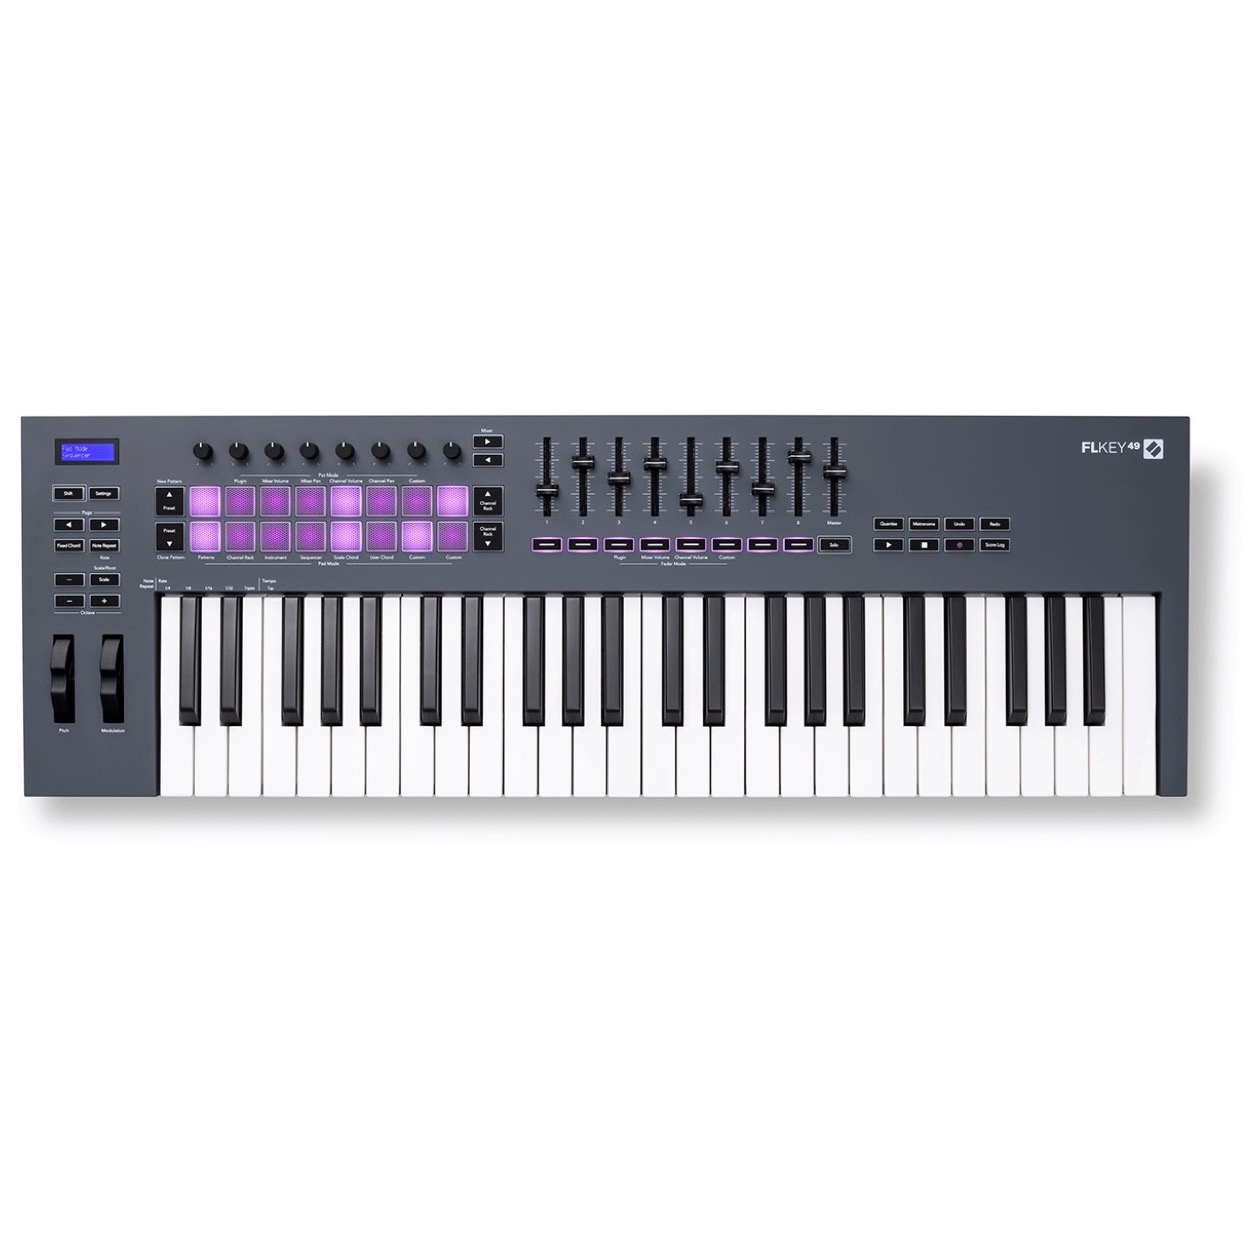 Novation FLkey 49 MIDI keyboard full-size keyboard controller for making music in FL Studio